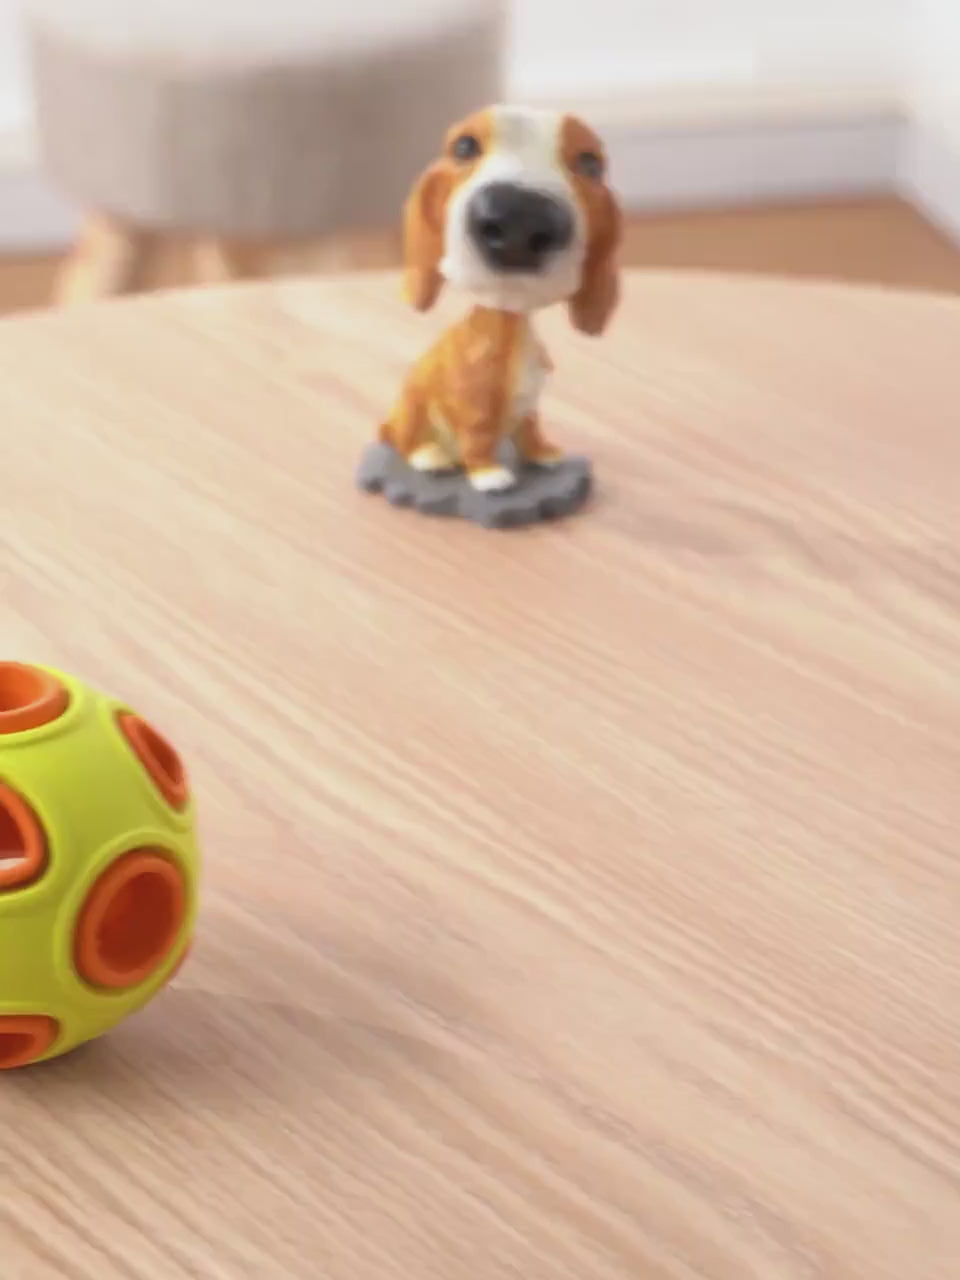 Luminous Sounding Dog Toy Ball